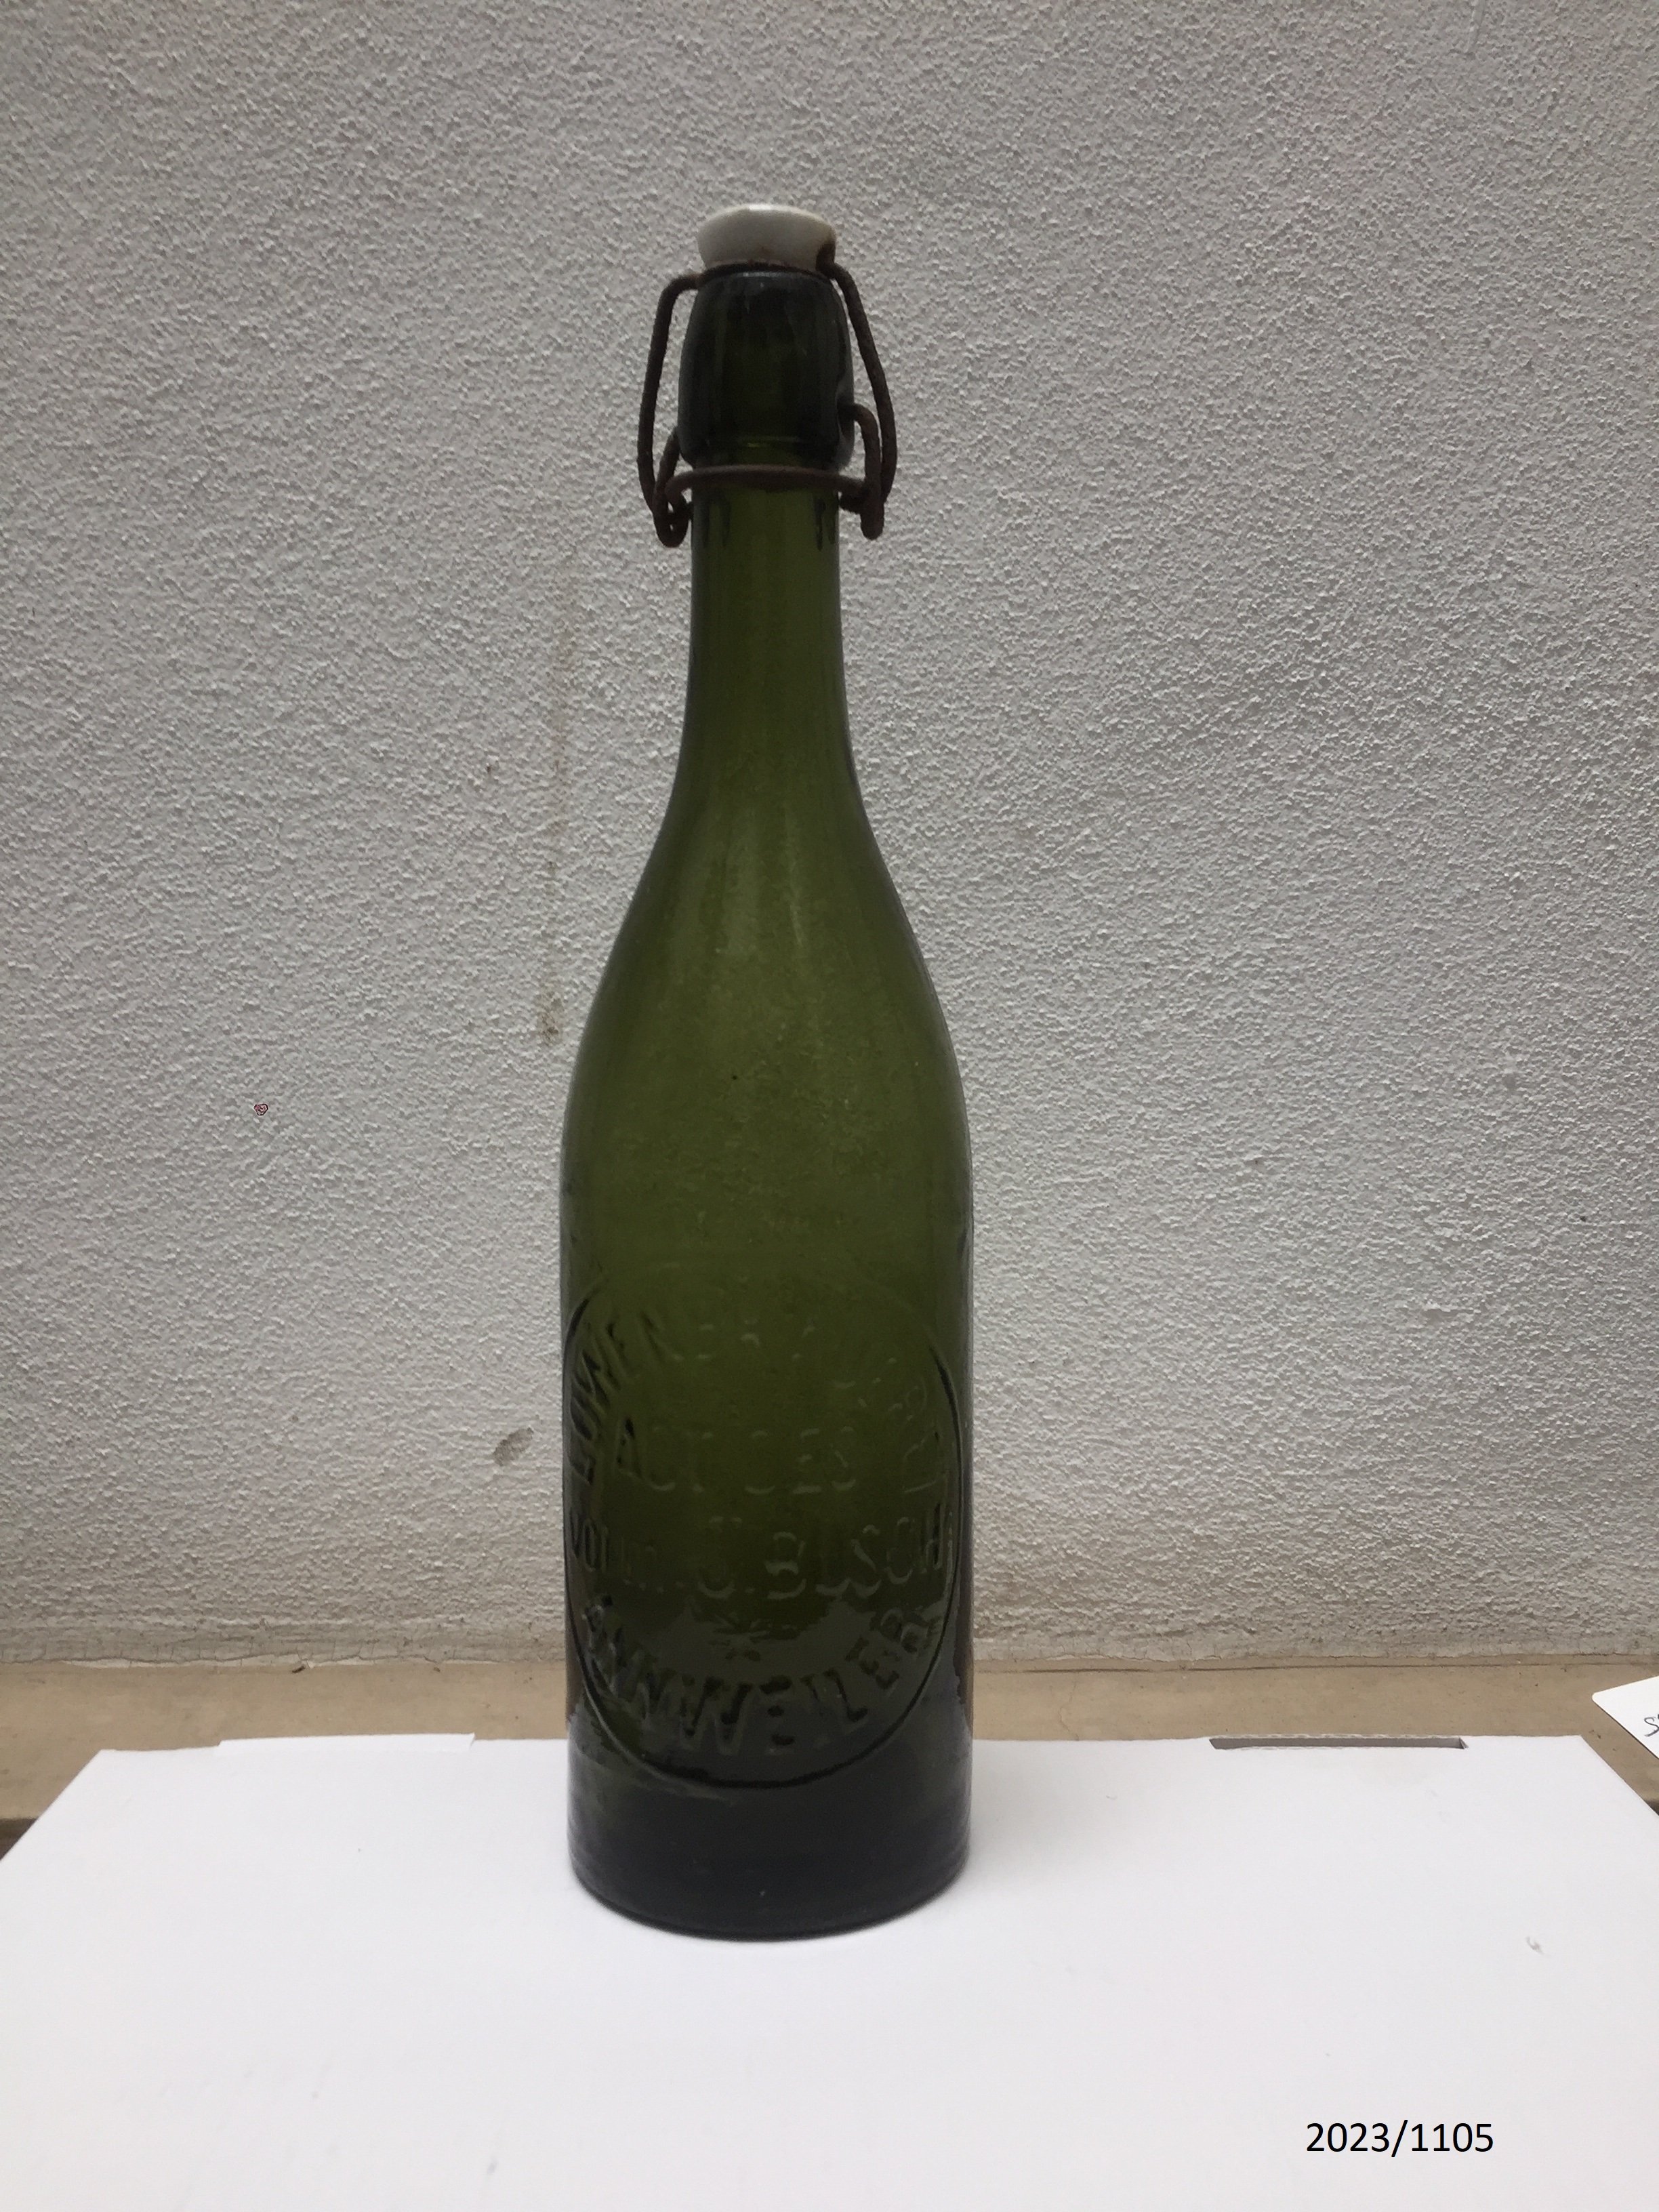 Bierflasche "Löwenbrauerei Annweiler" 1 Liter (Stadtmuseum Bad Dürkheim im Kulturzentrum Haus Catoir CC BY-NC-SA)